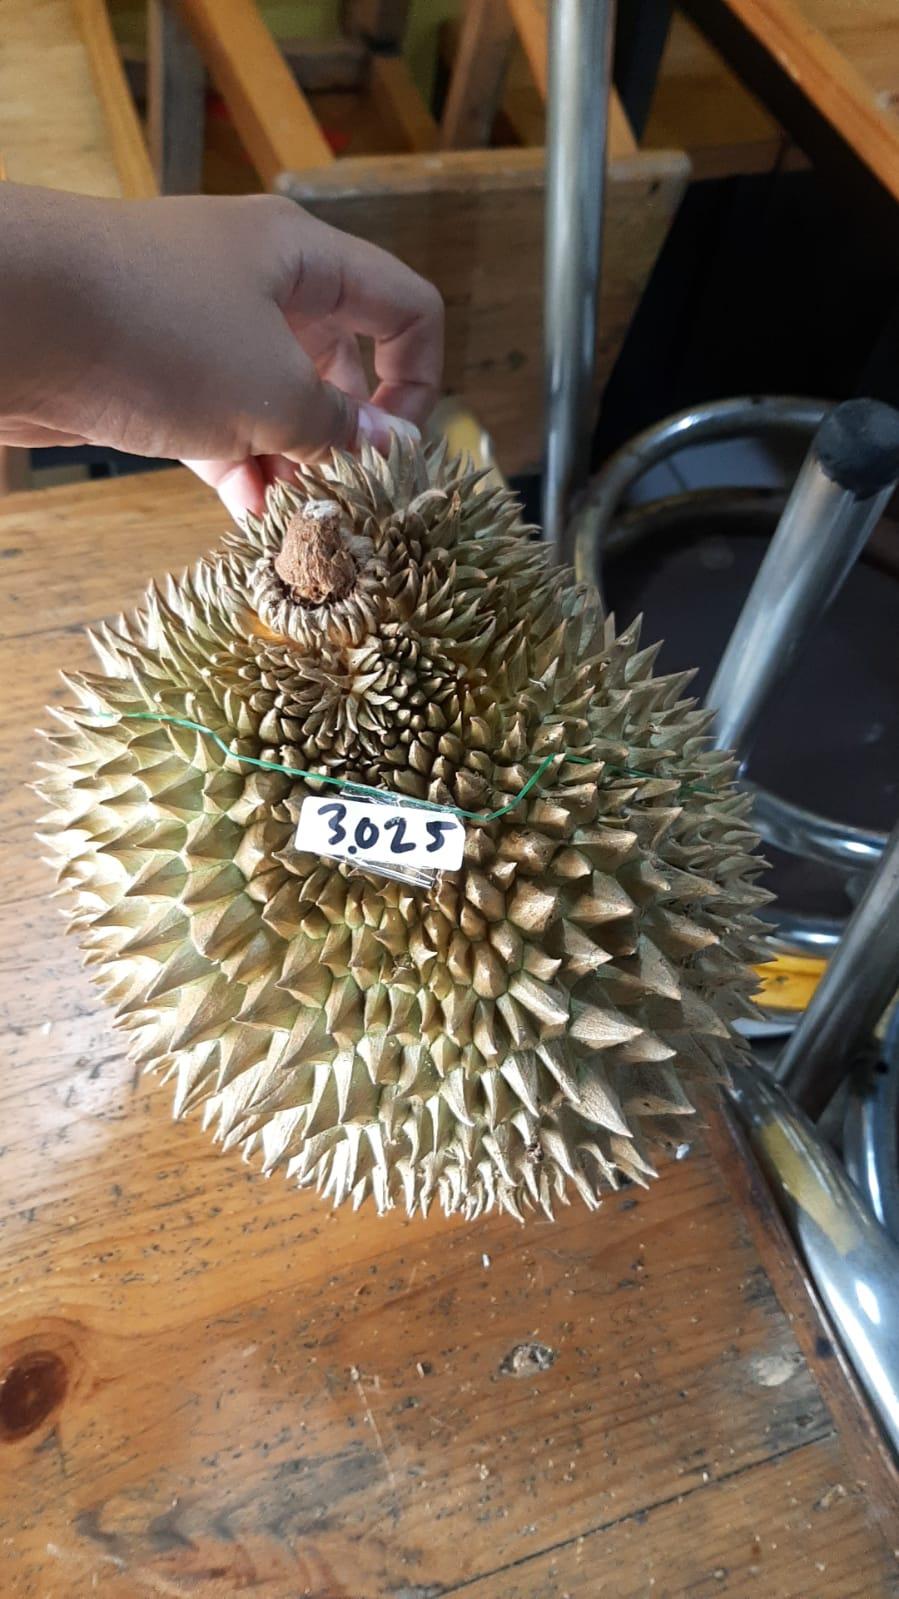 Kedai Durian Wak Roban review